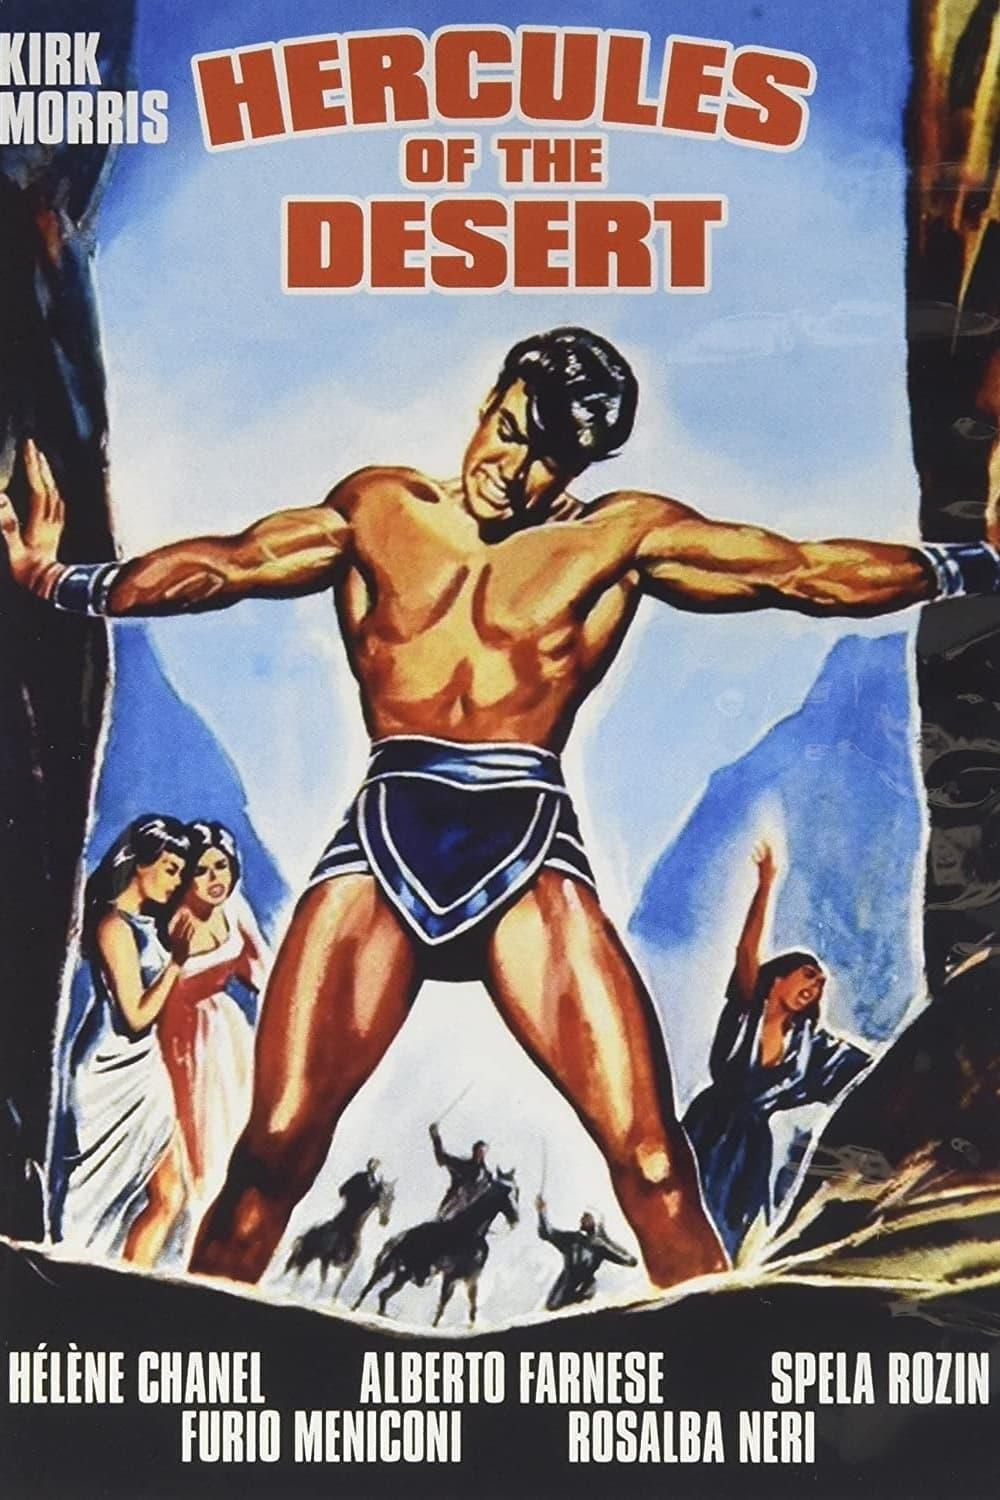 Hercules of the Desert poster